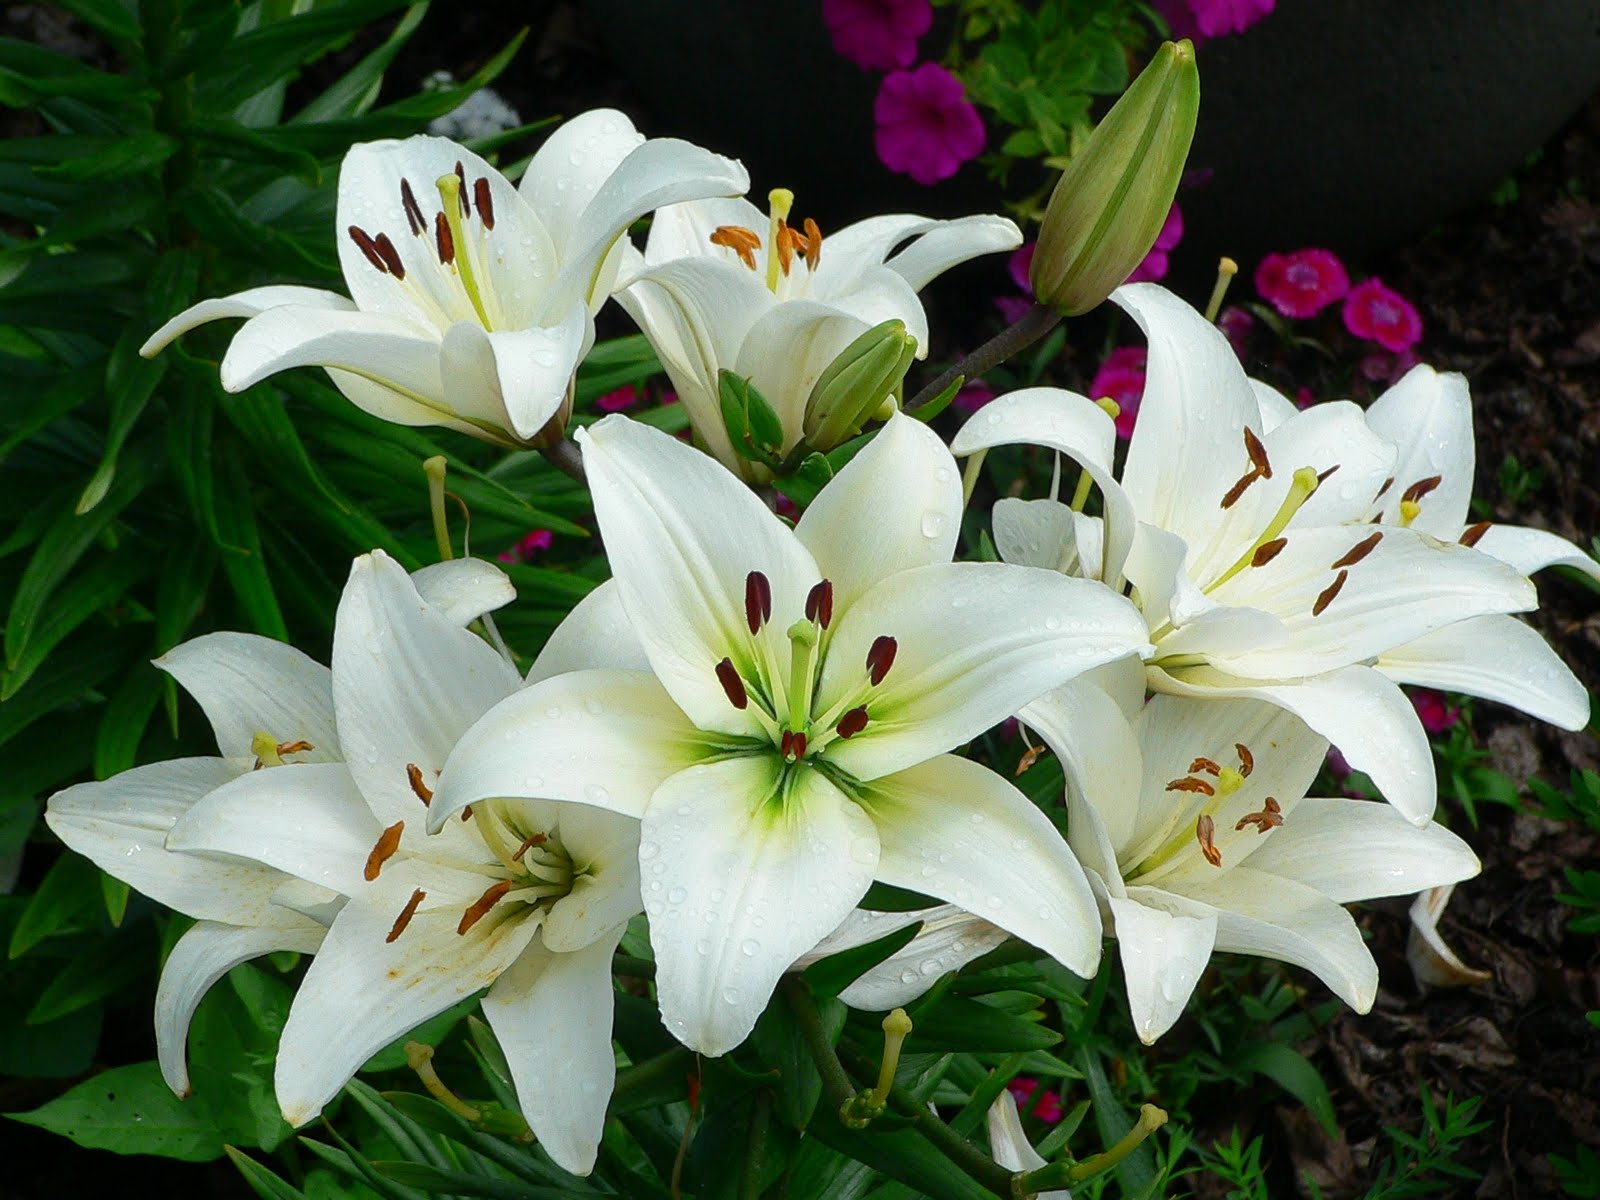 Christiani Sianturi: jenis-jenis bunga lily dari suku Liliaceae